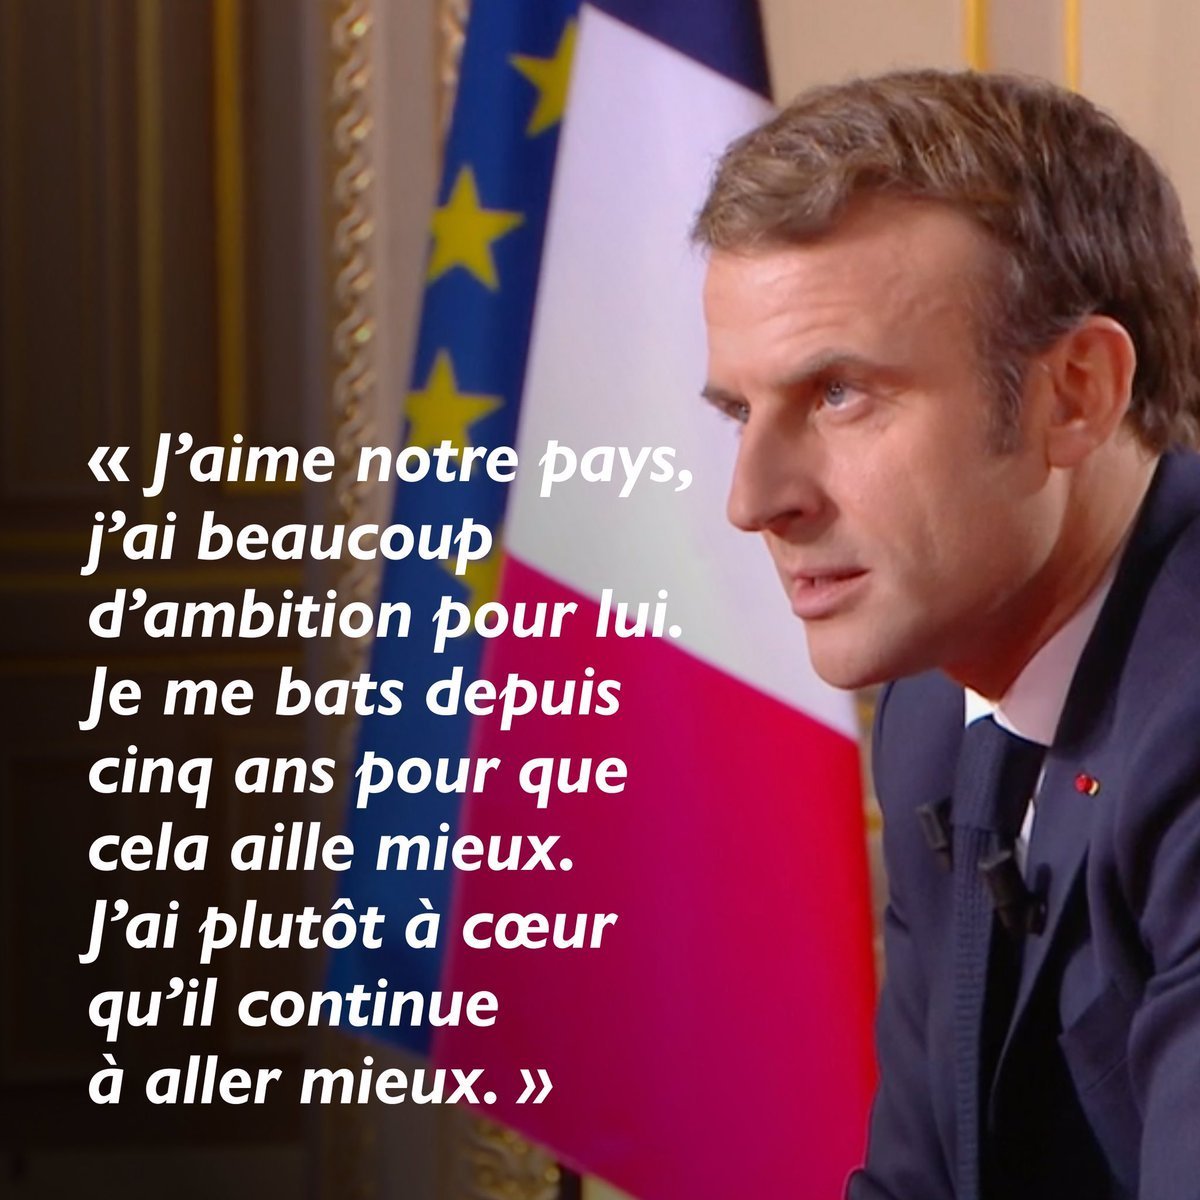 👉What else. 
#Merci #Macron2022  #MerciMacron 
@AvecVous
 #NousTous  #AvecMacron #Ensemble #5ansdeplus #EuropeanUnion🇪🇺 #France 🇫🇷